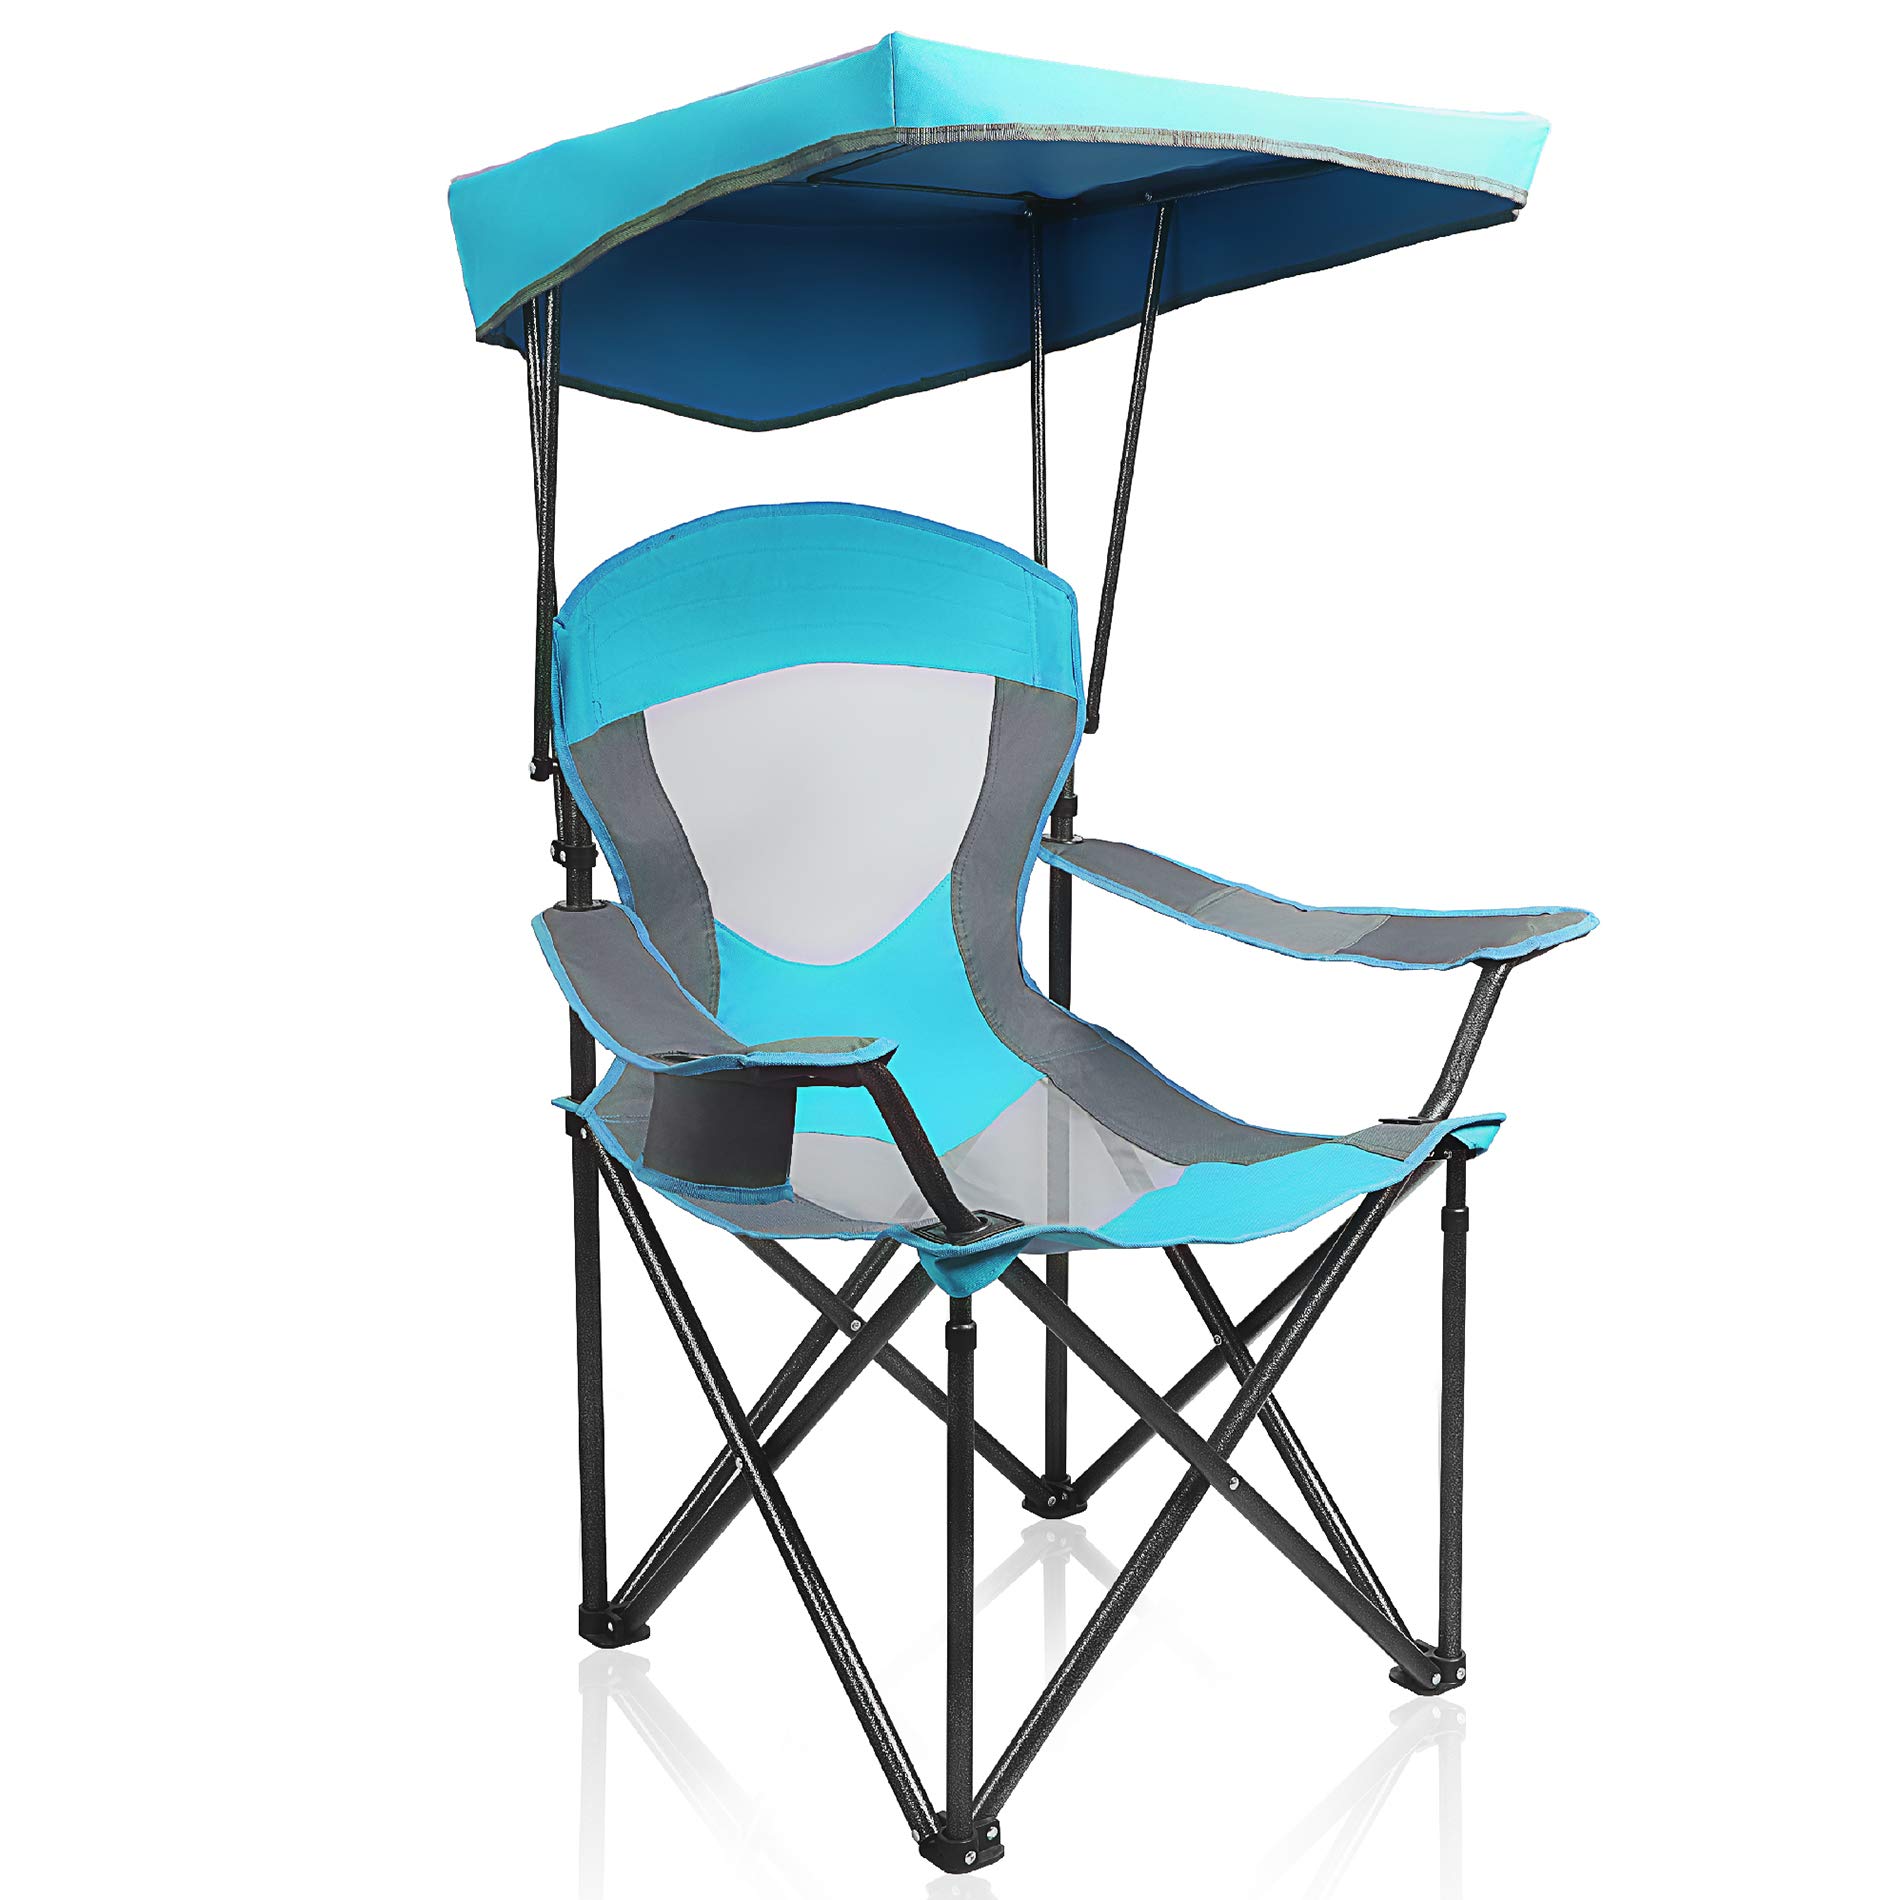 ALPHA CAMP كرسي صالة كانوبي للخدمة الشاقة ظلة كرسي سفر للتنزه مع حامل أكواب أزرق مينا